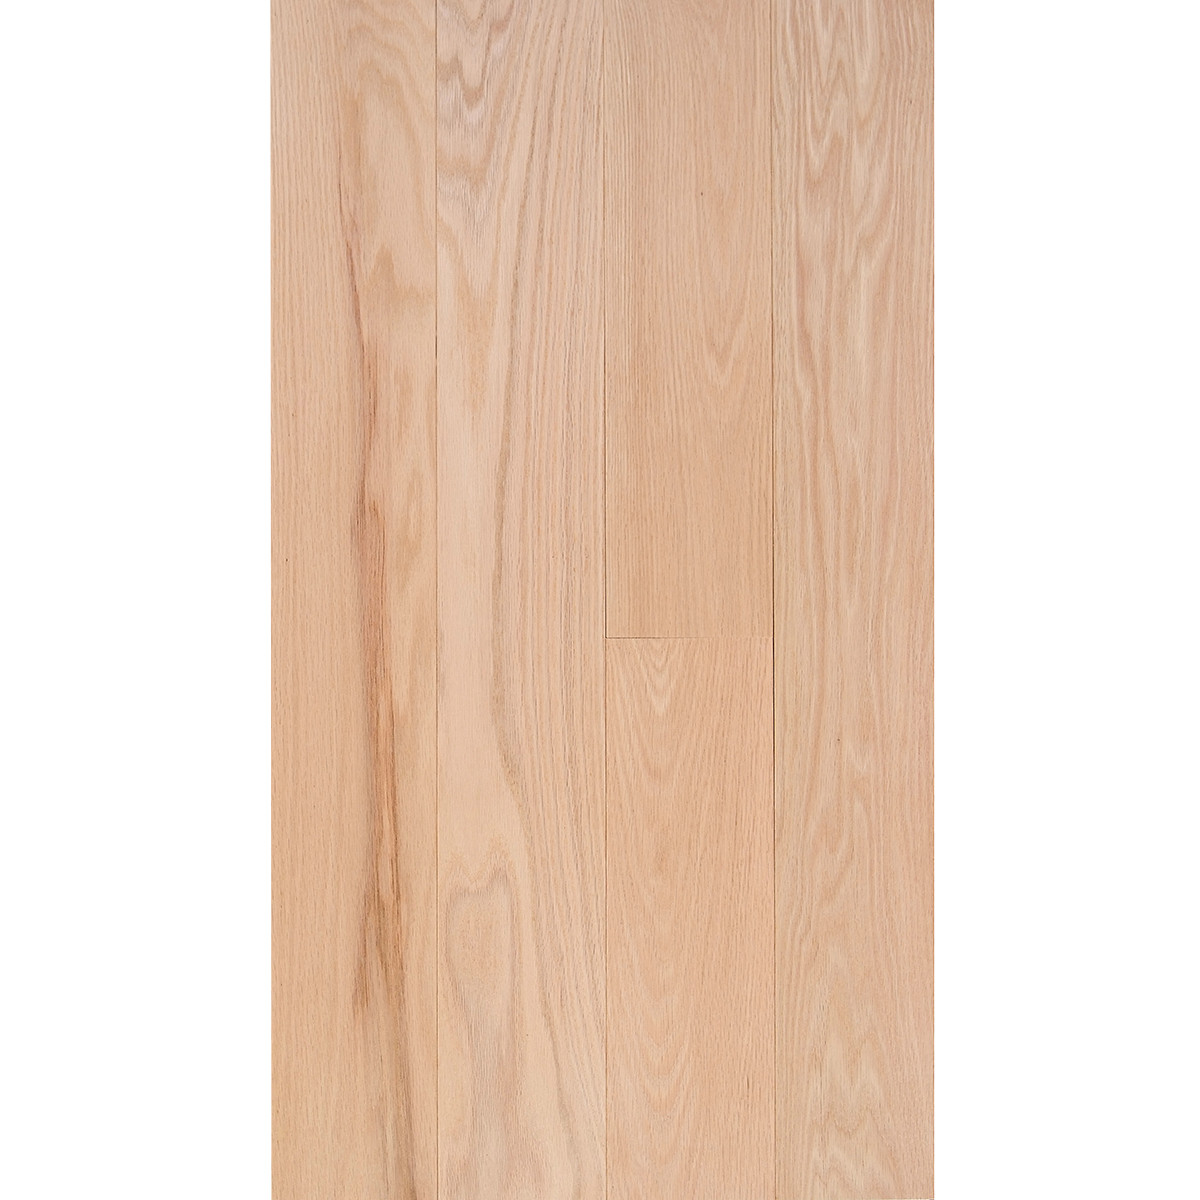 eastern hardwood flooring reviews of red oak 3 4 x 5 select grade flooring inside fs 5 redoak select em flooring